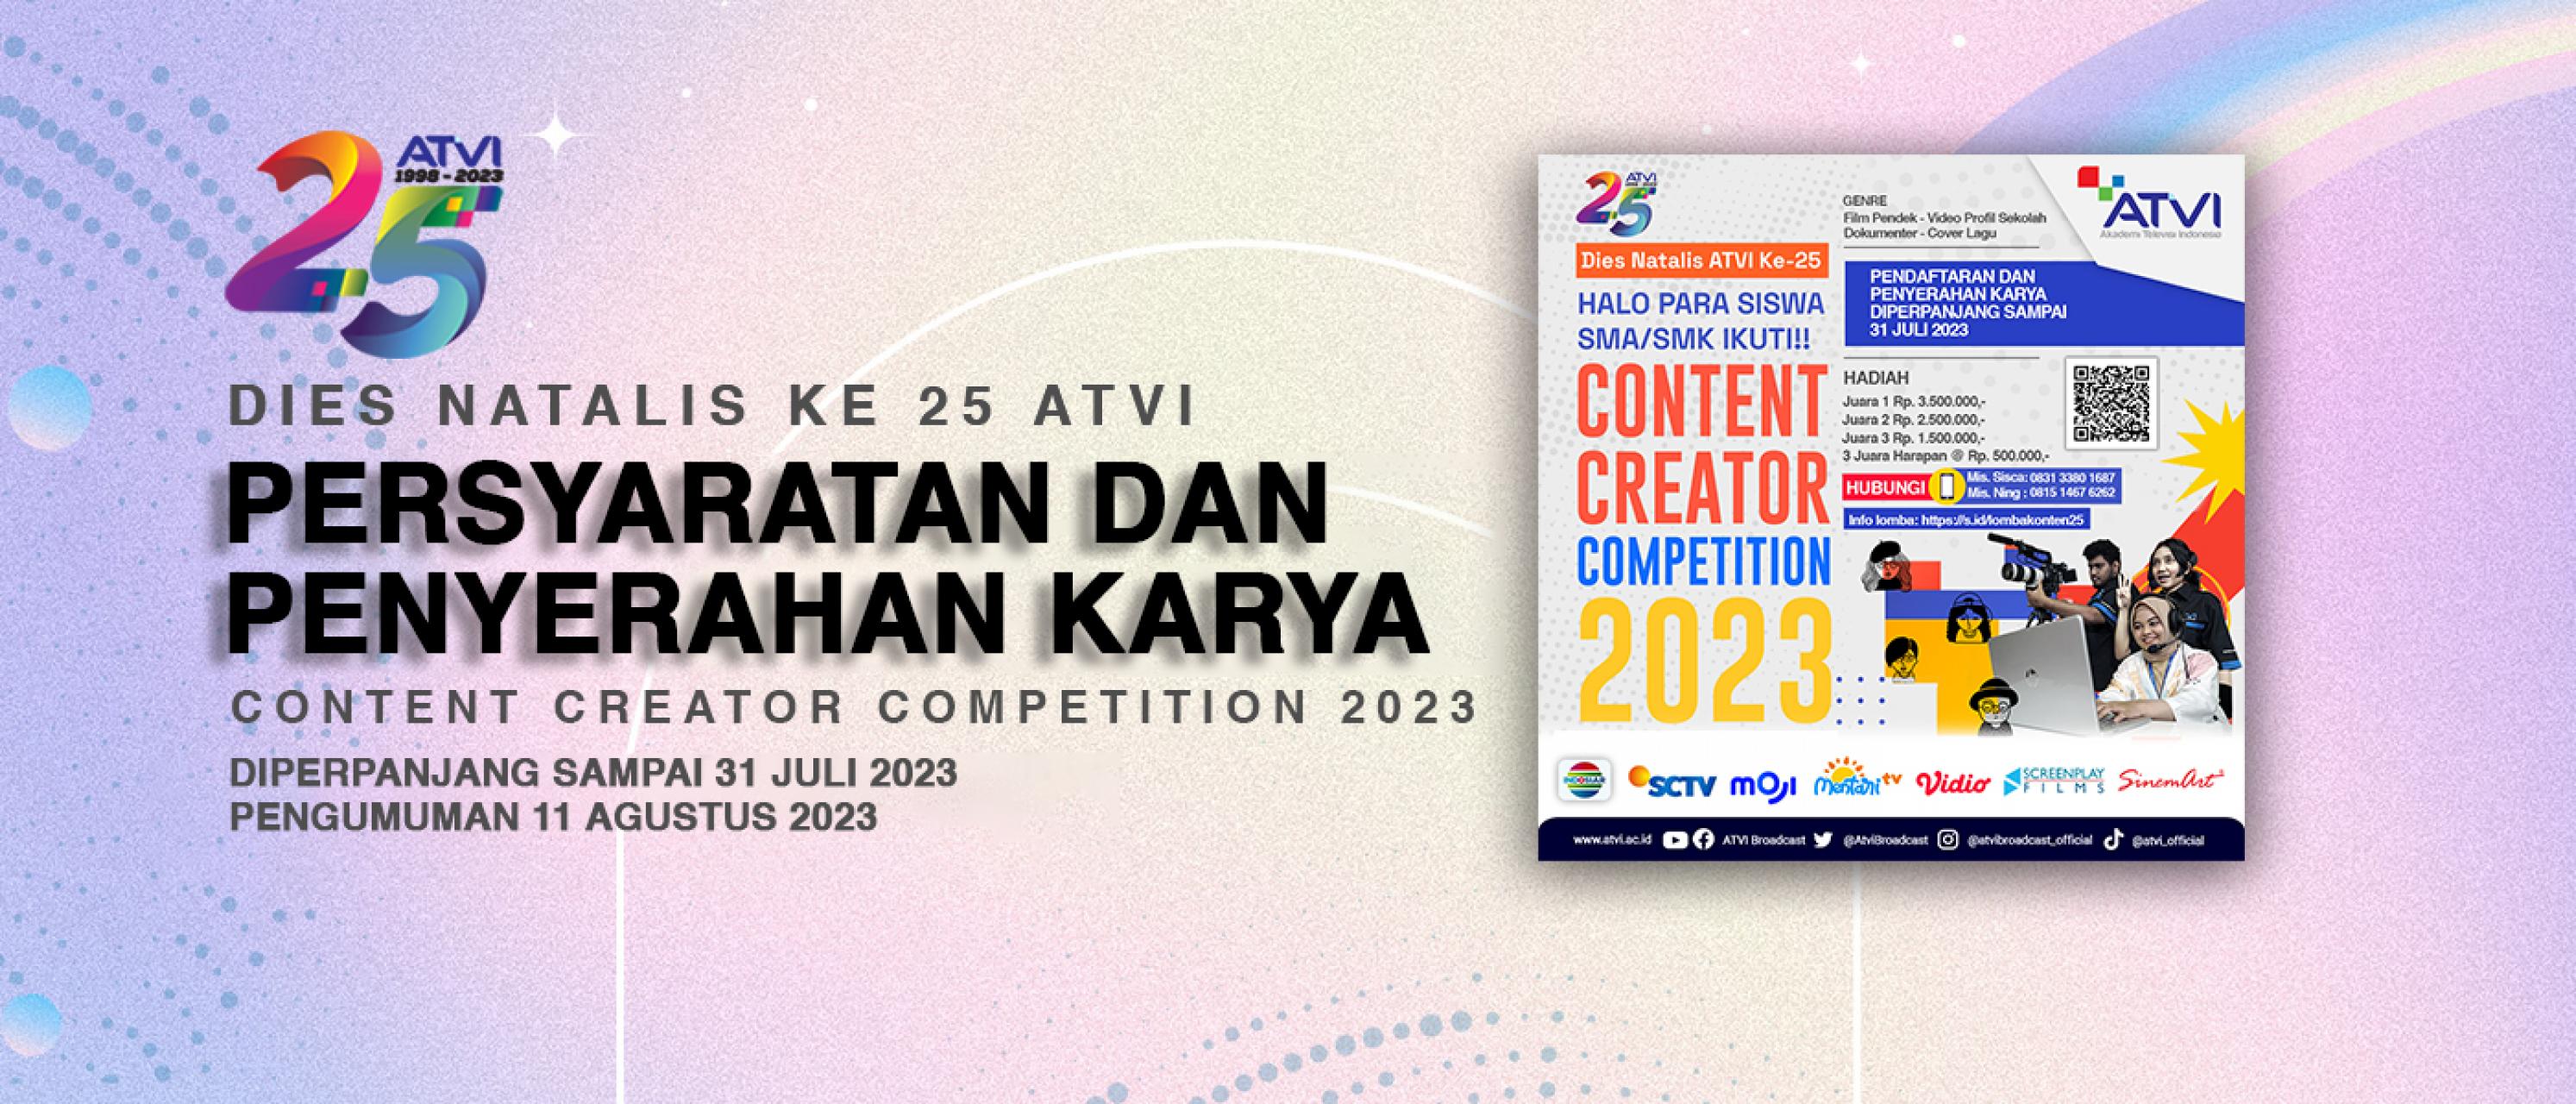 Conten Creator Competition Dies Natalis Ke-25 ATVI 2023